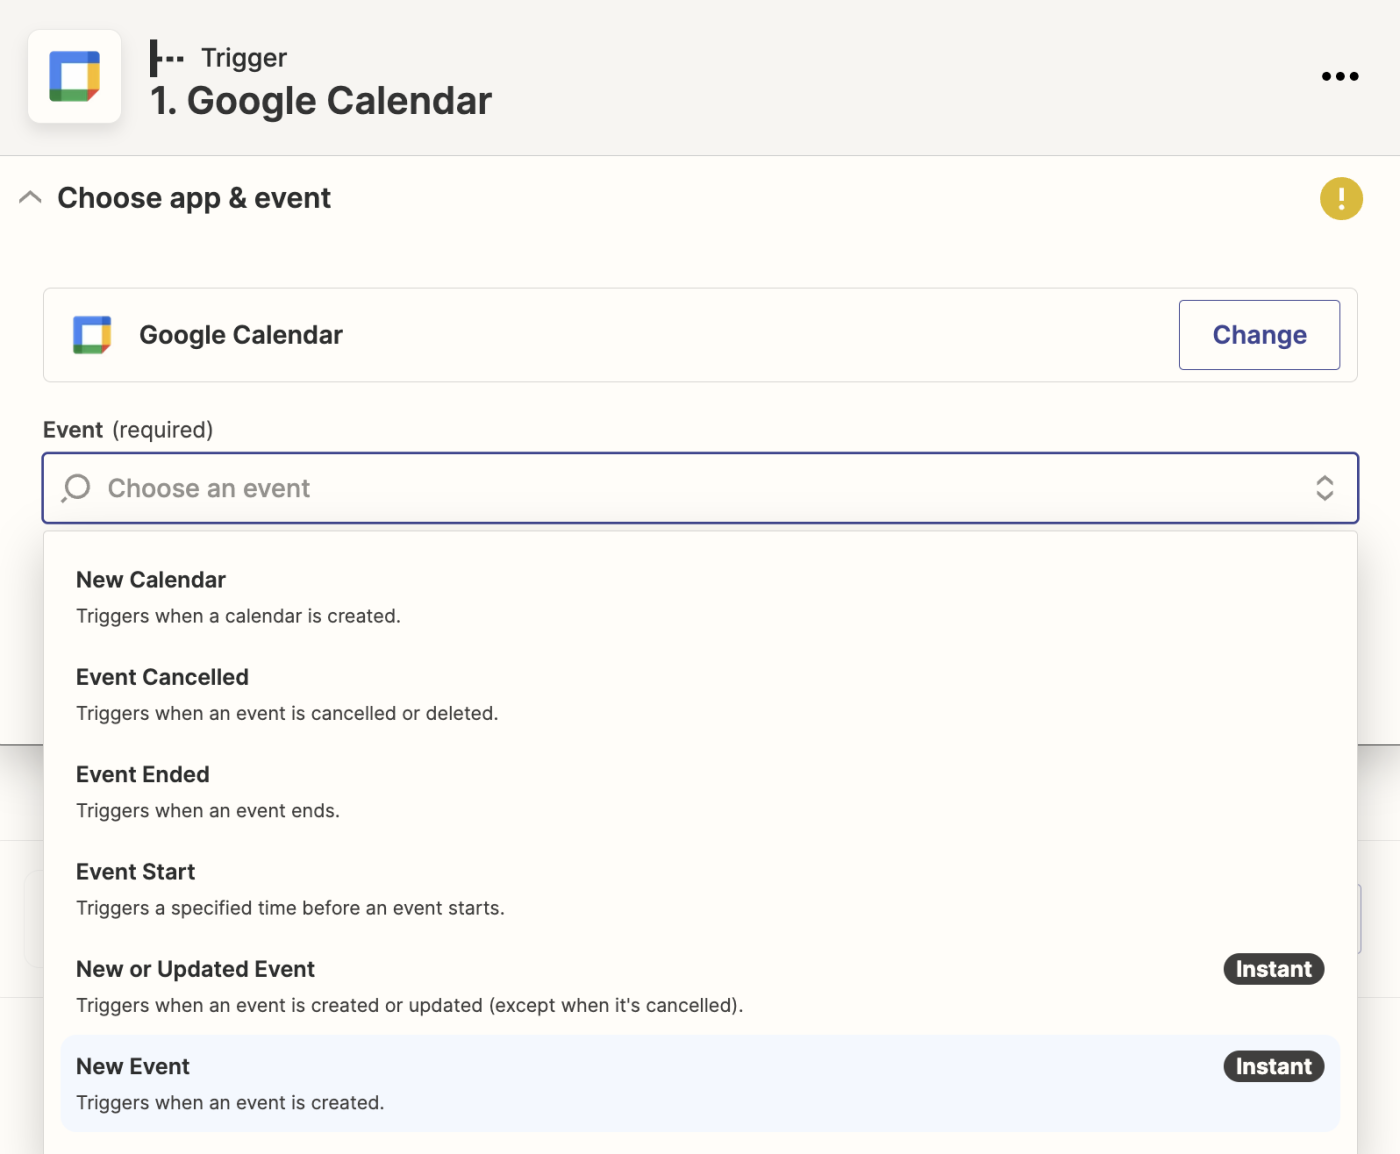 A dropdown shows a list of trigger events for Google Calendar, including New Calendar and Event Canceled. 